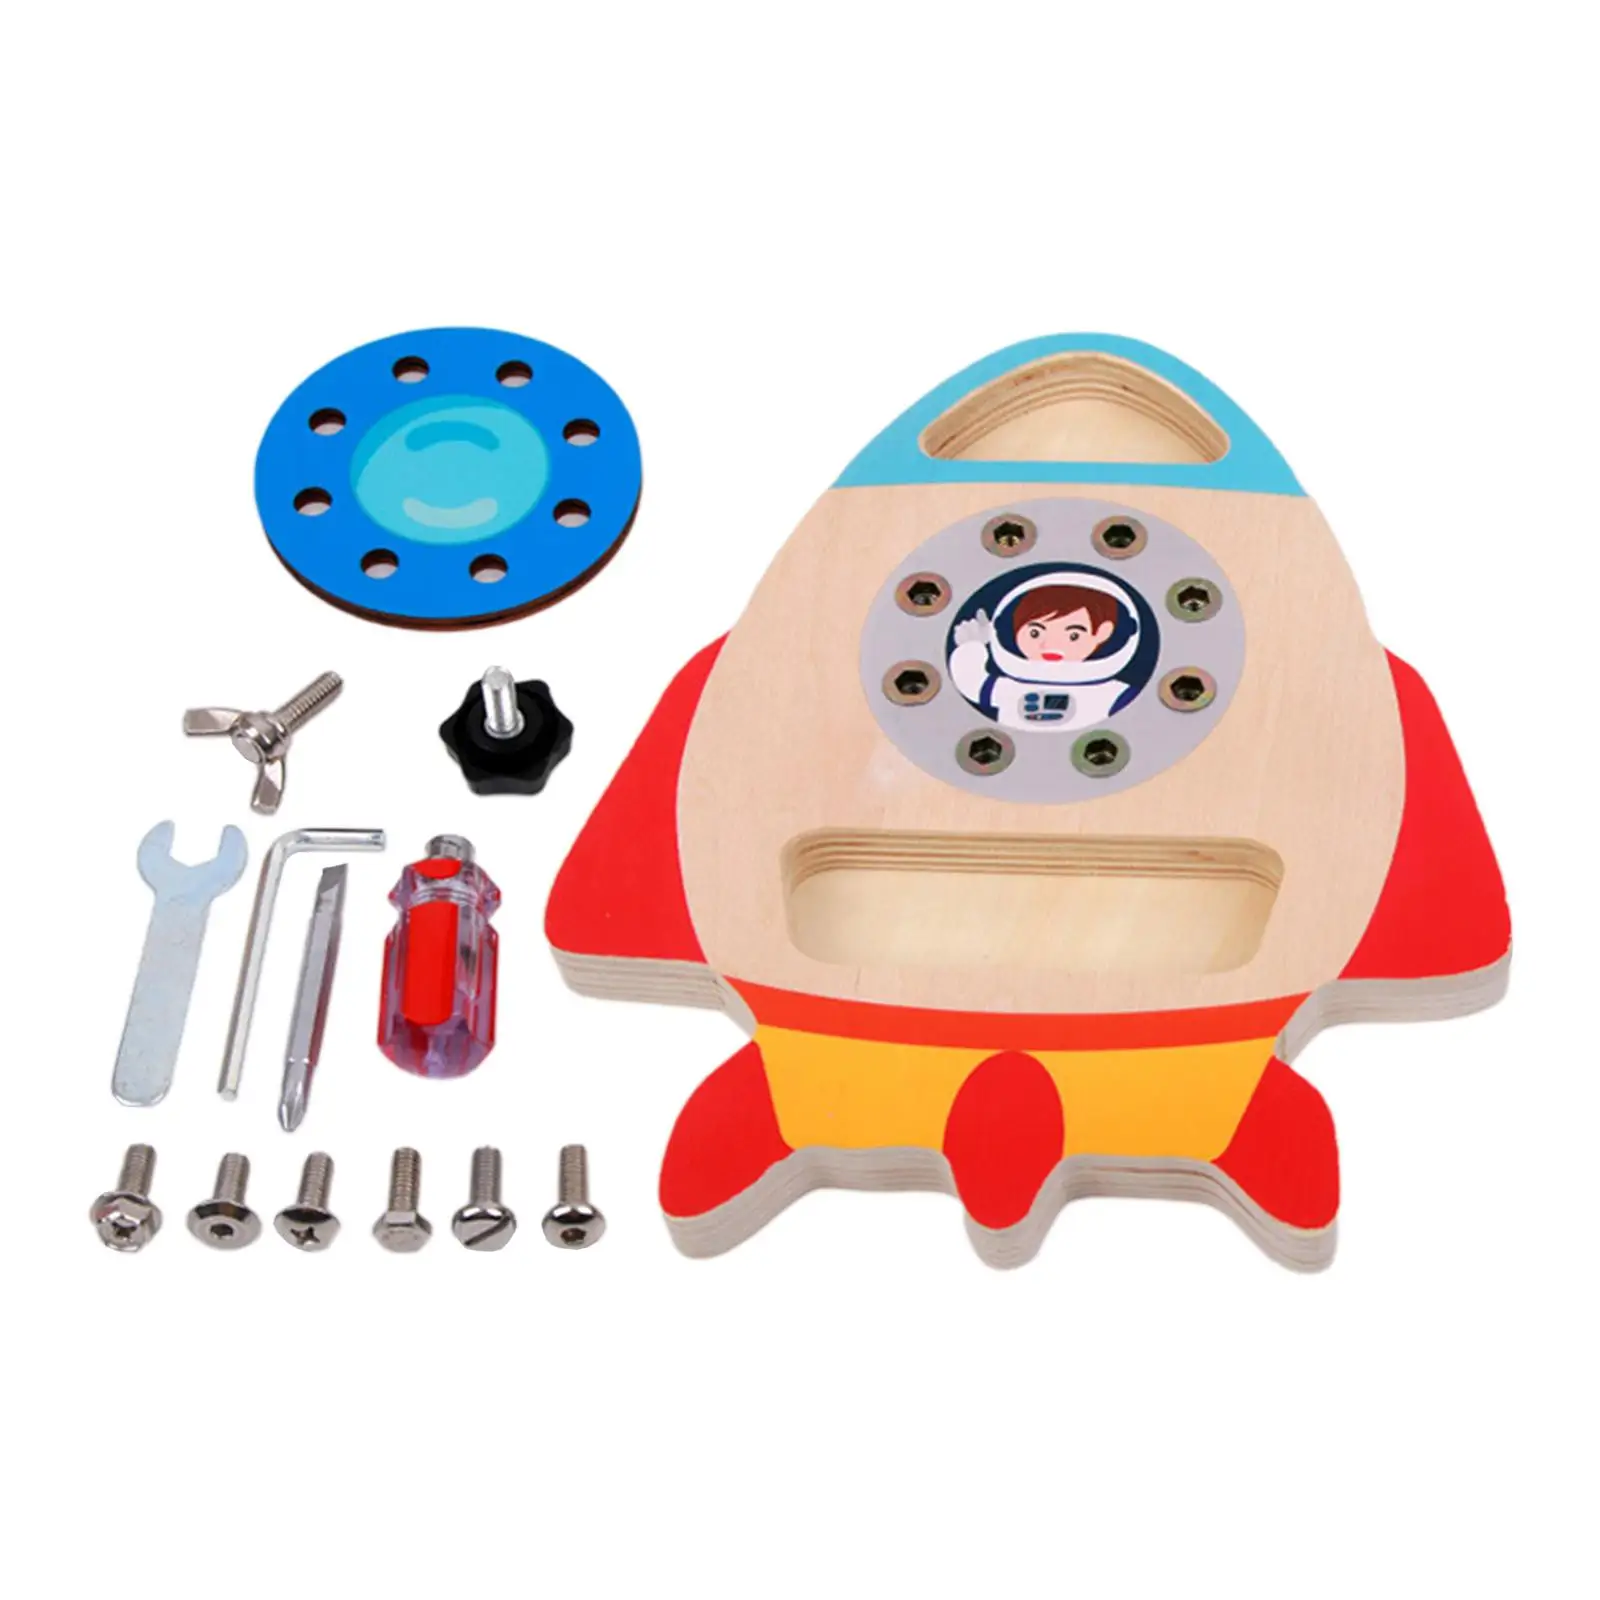 Montessori Rocket Shaped Screwdriver Board Set Educational Sensory Learning Toy Develop Fine Motor Skills for Children Kids Boy